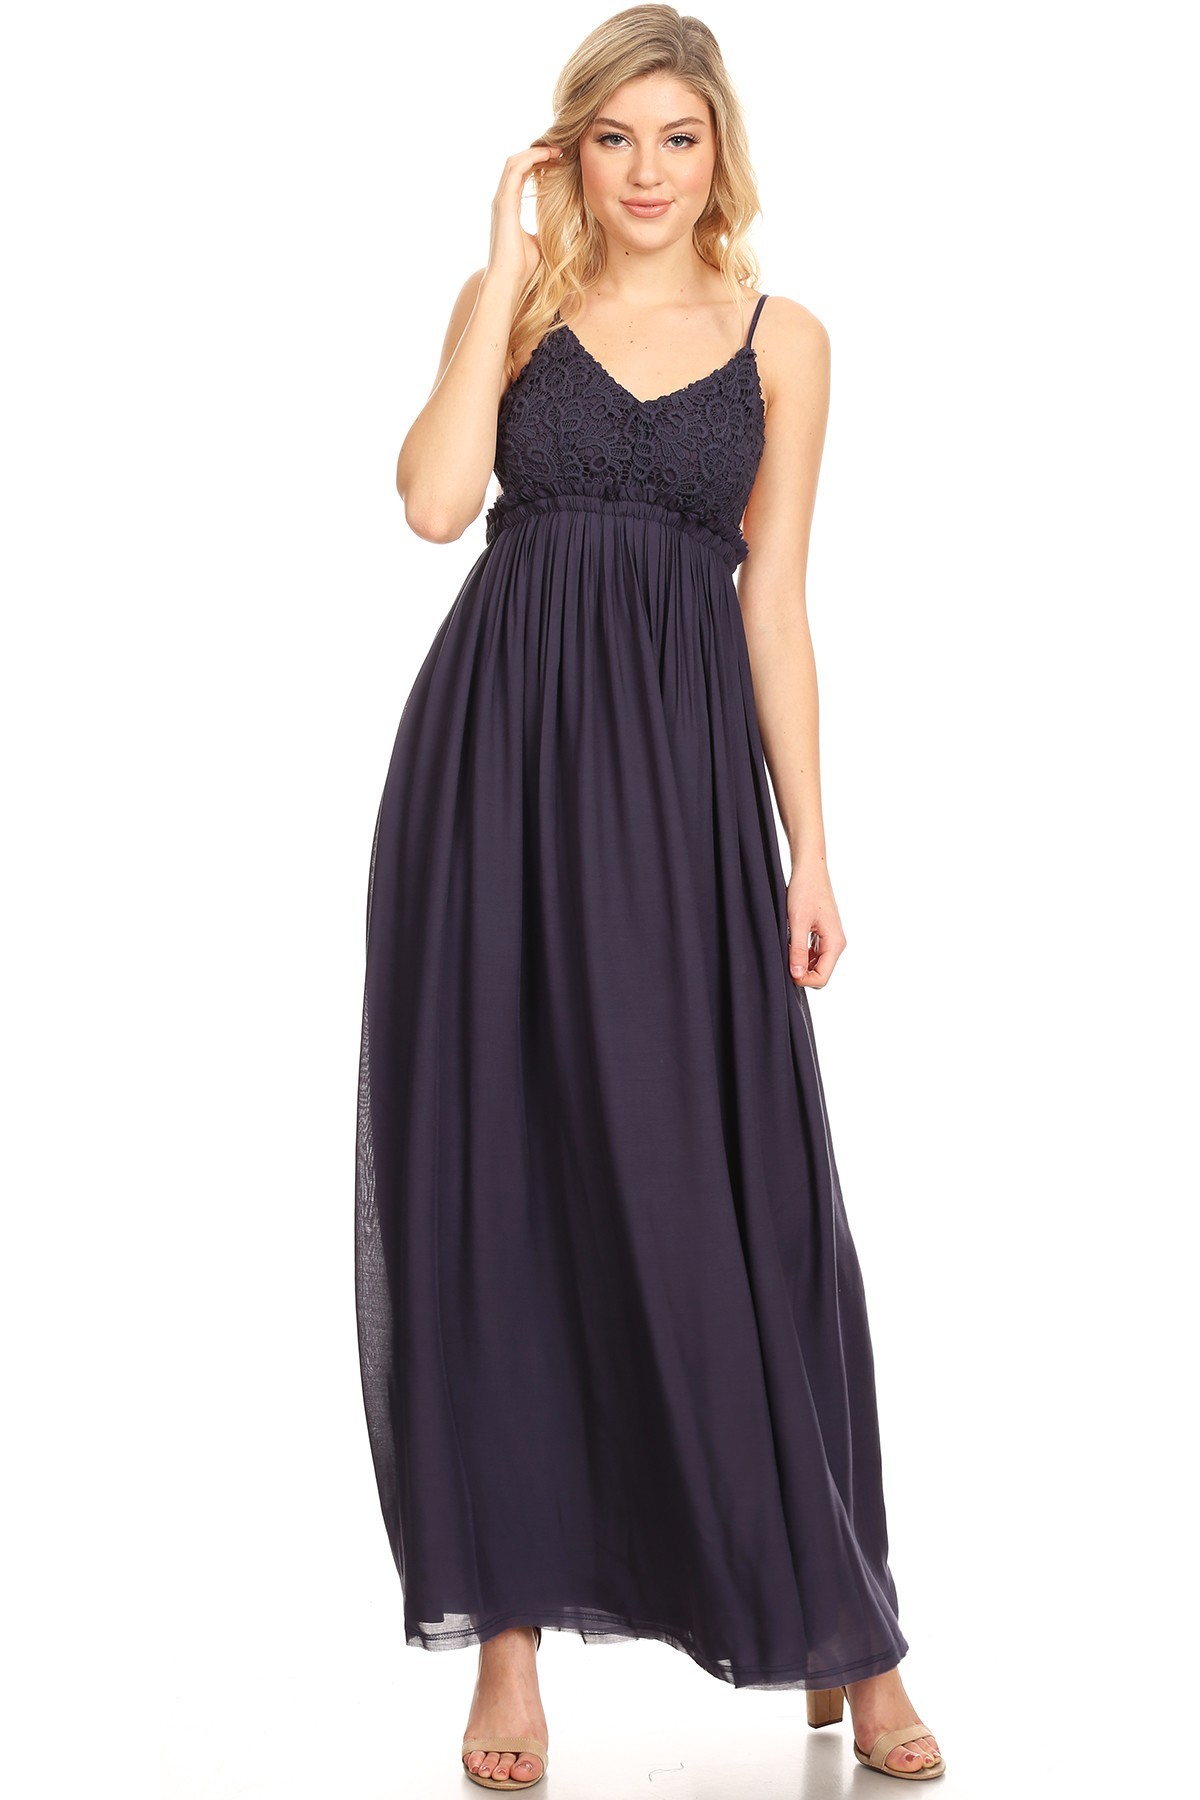 MISS AVENUE > Maxi Dress > #MS1006 − LAShowroom.com